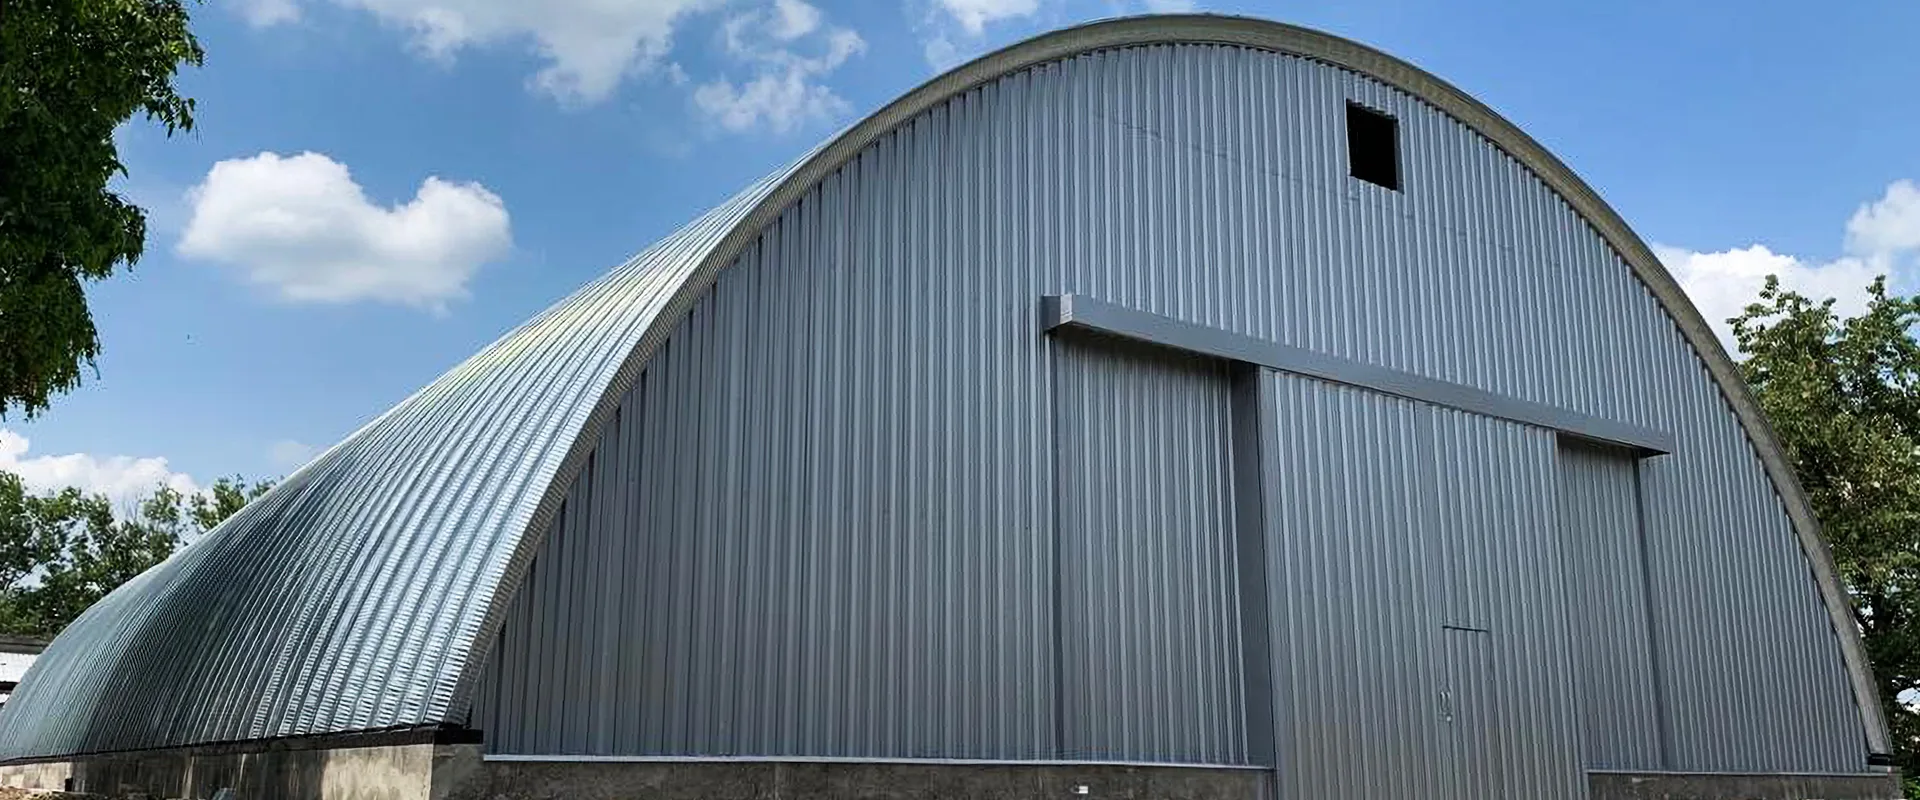 Casa viitorului hangar metalic arcuit angarmd main